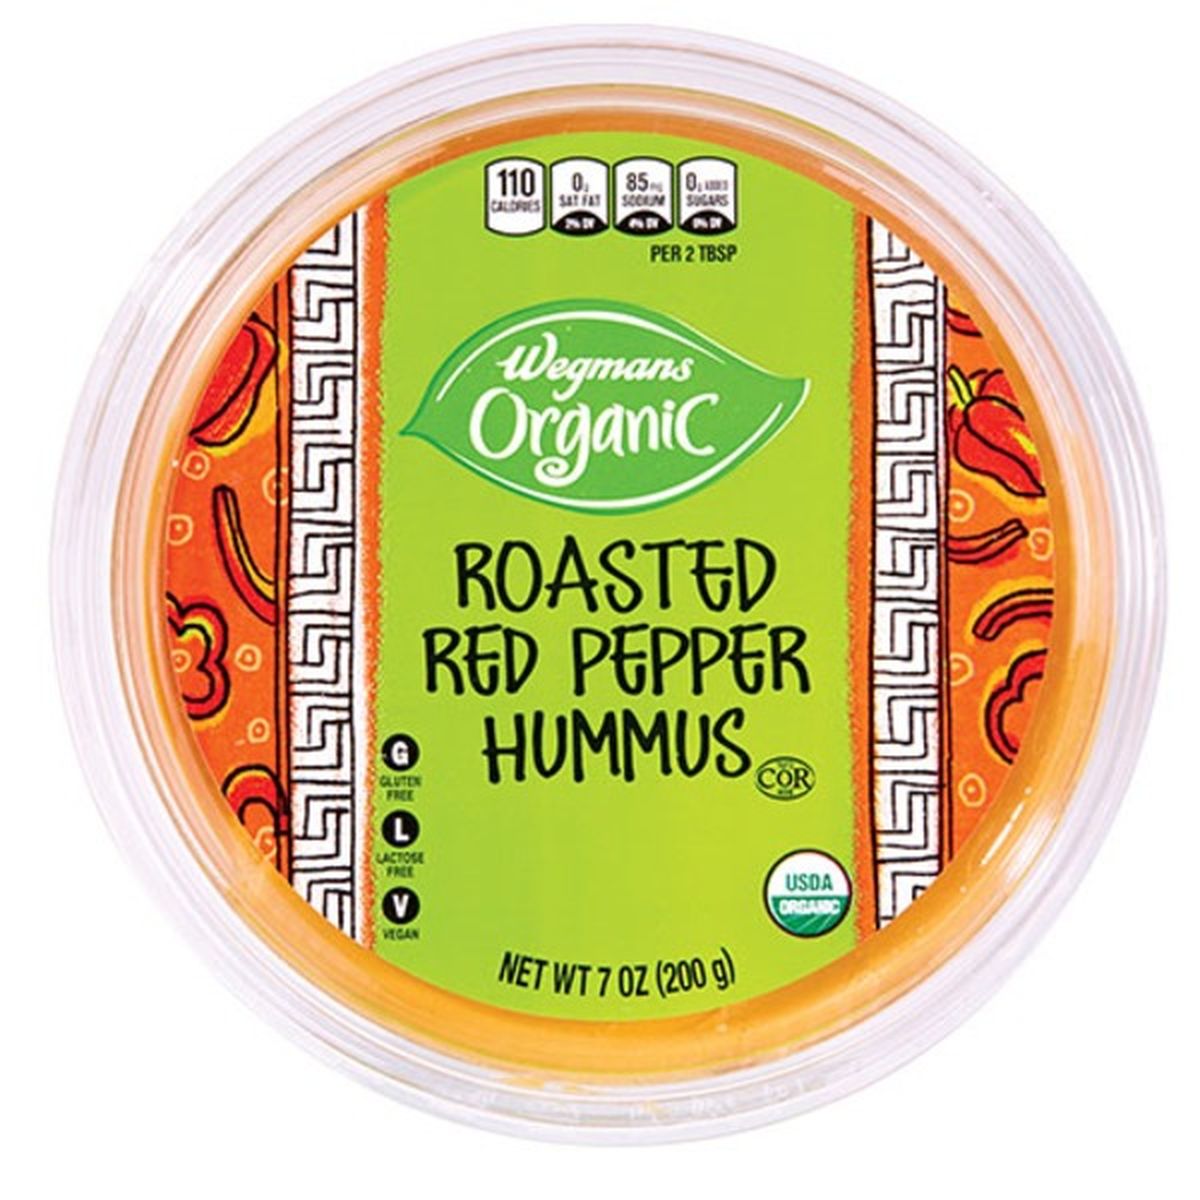 Calories in Wegmans Organic Roasted Red Pepper Hummus